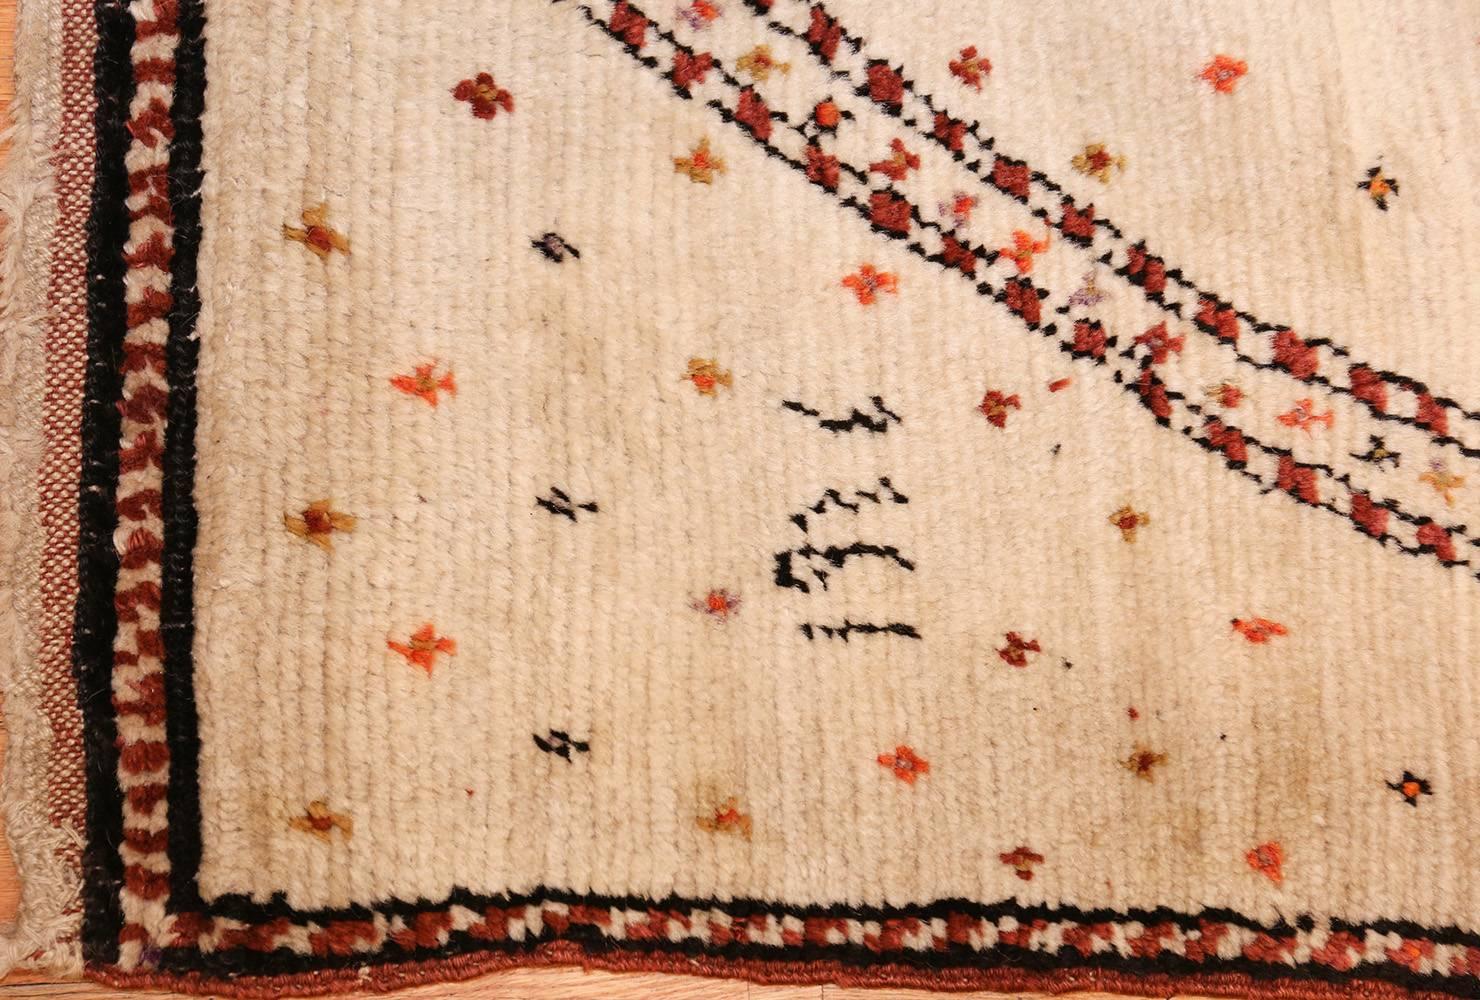 20th Century Antique Tribal Prayer Design Persian Gabbeh Rug. Size: 3 ft x 5 ft 3 in